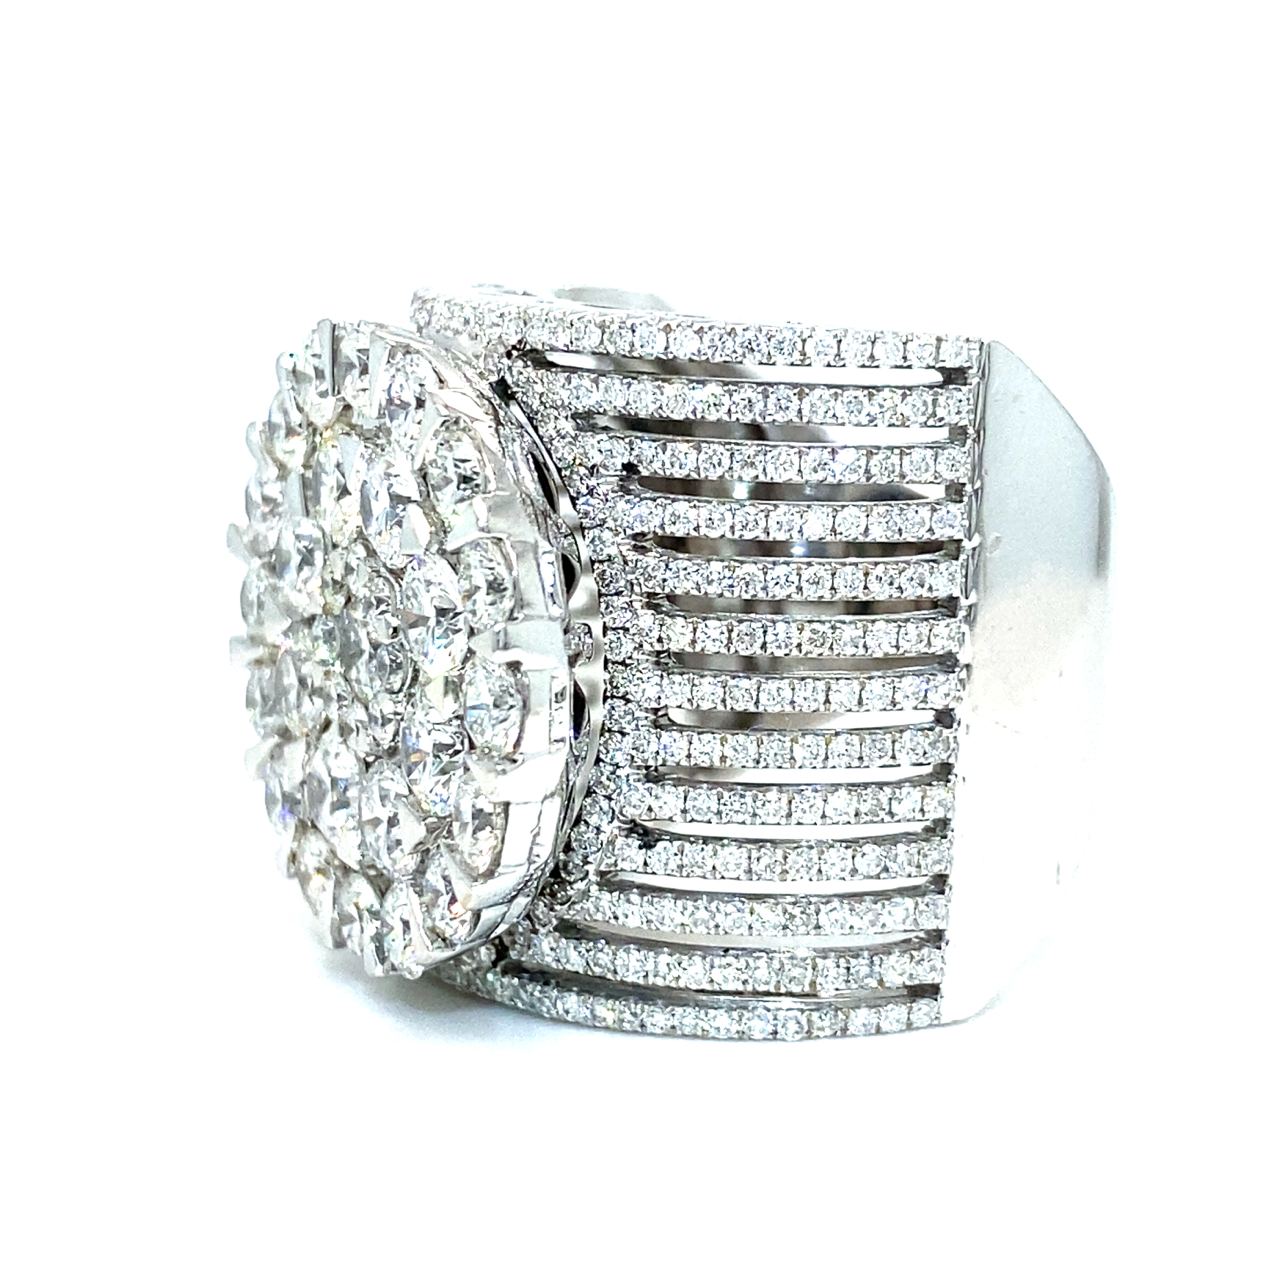 18K White Gold Diamond Ring